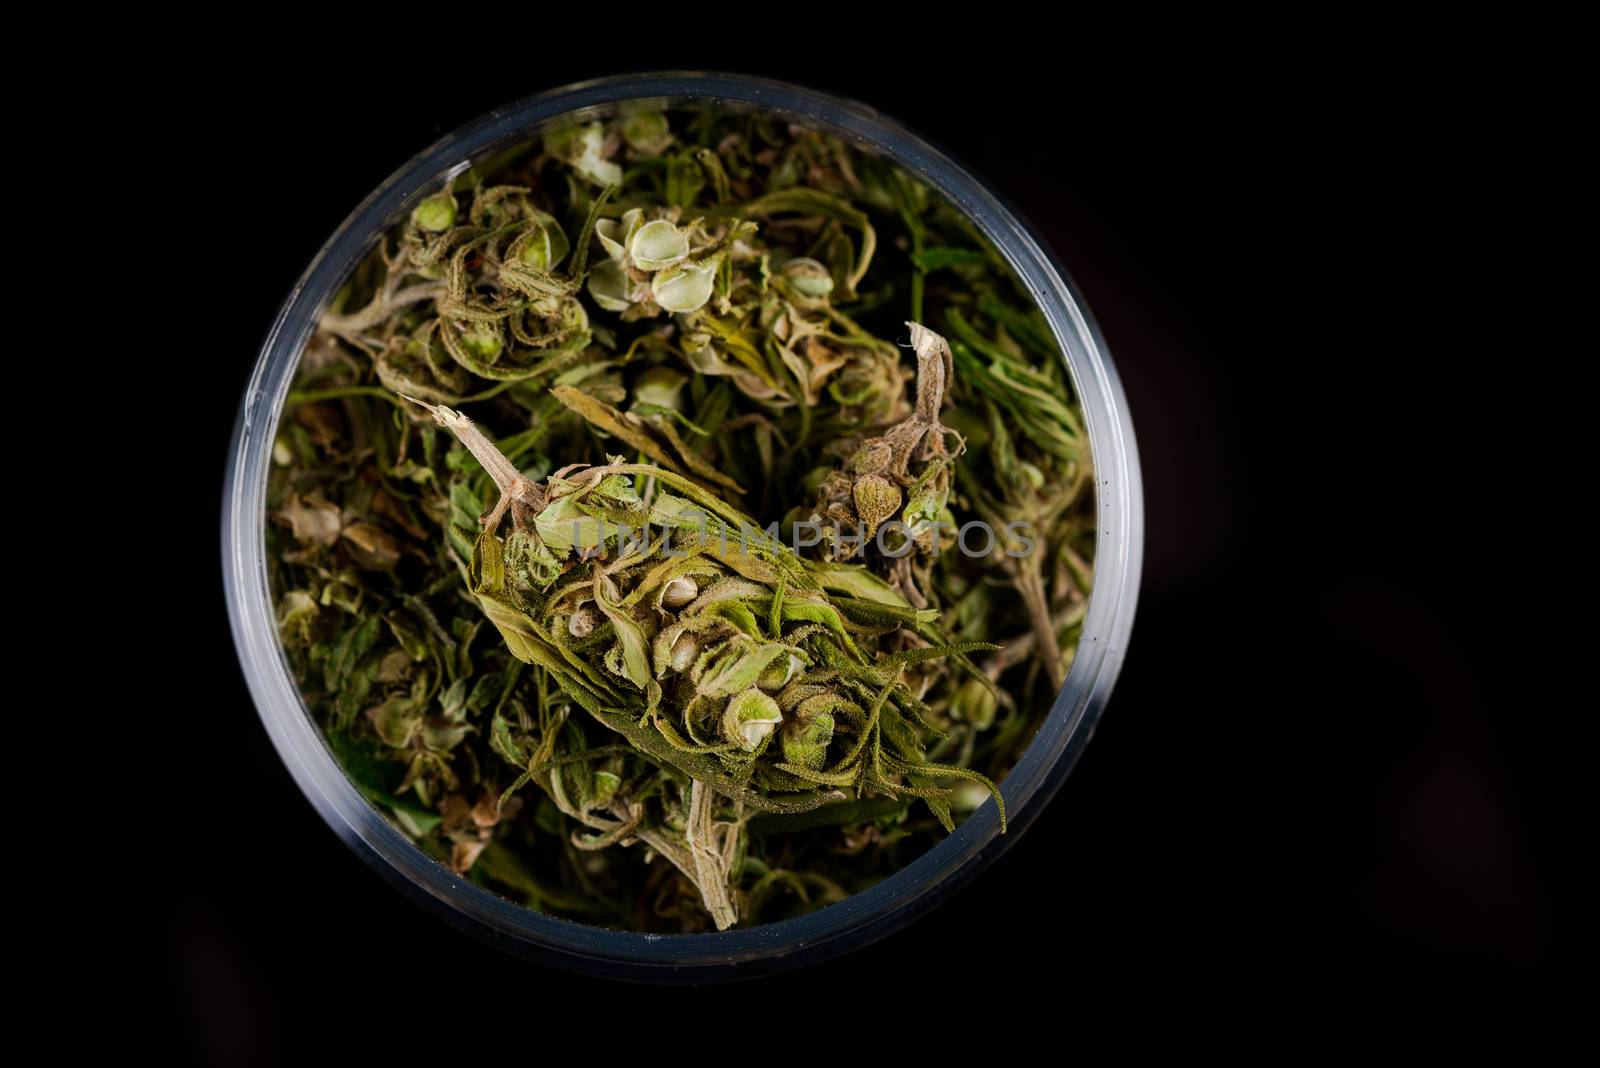 Cannabis Flower Buds in Glass Jar, Top Down Close Up. Dark Backg by merc67